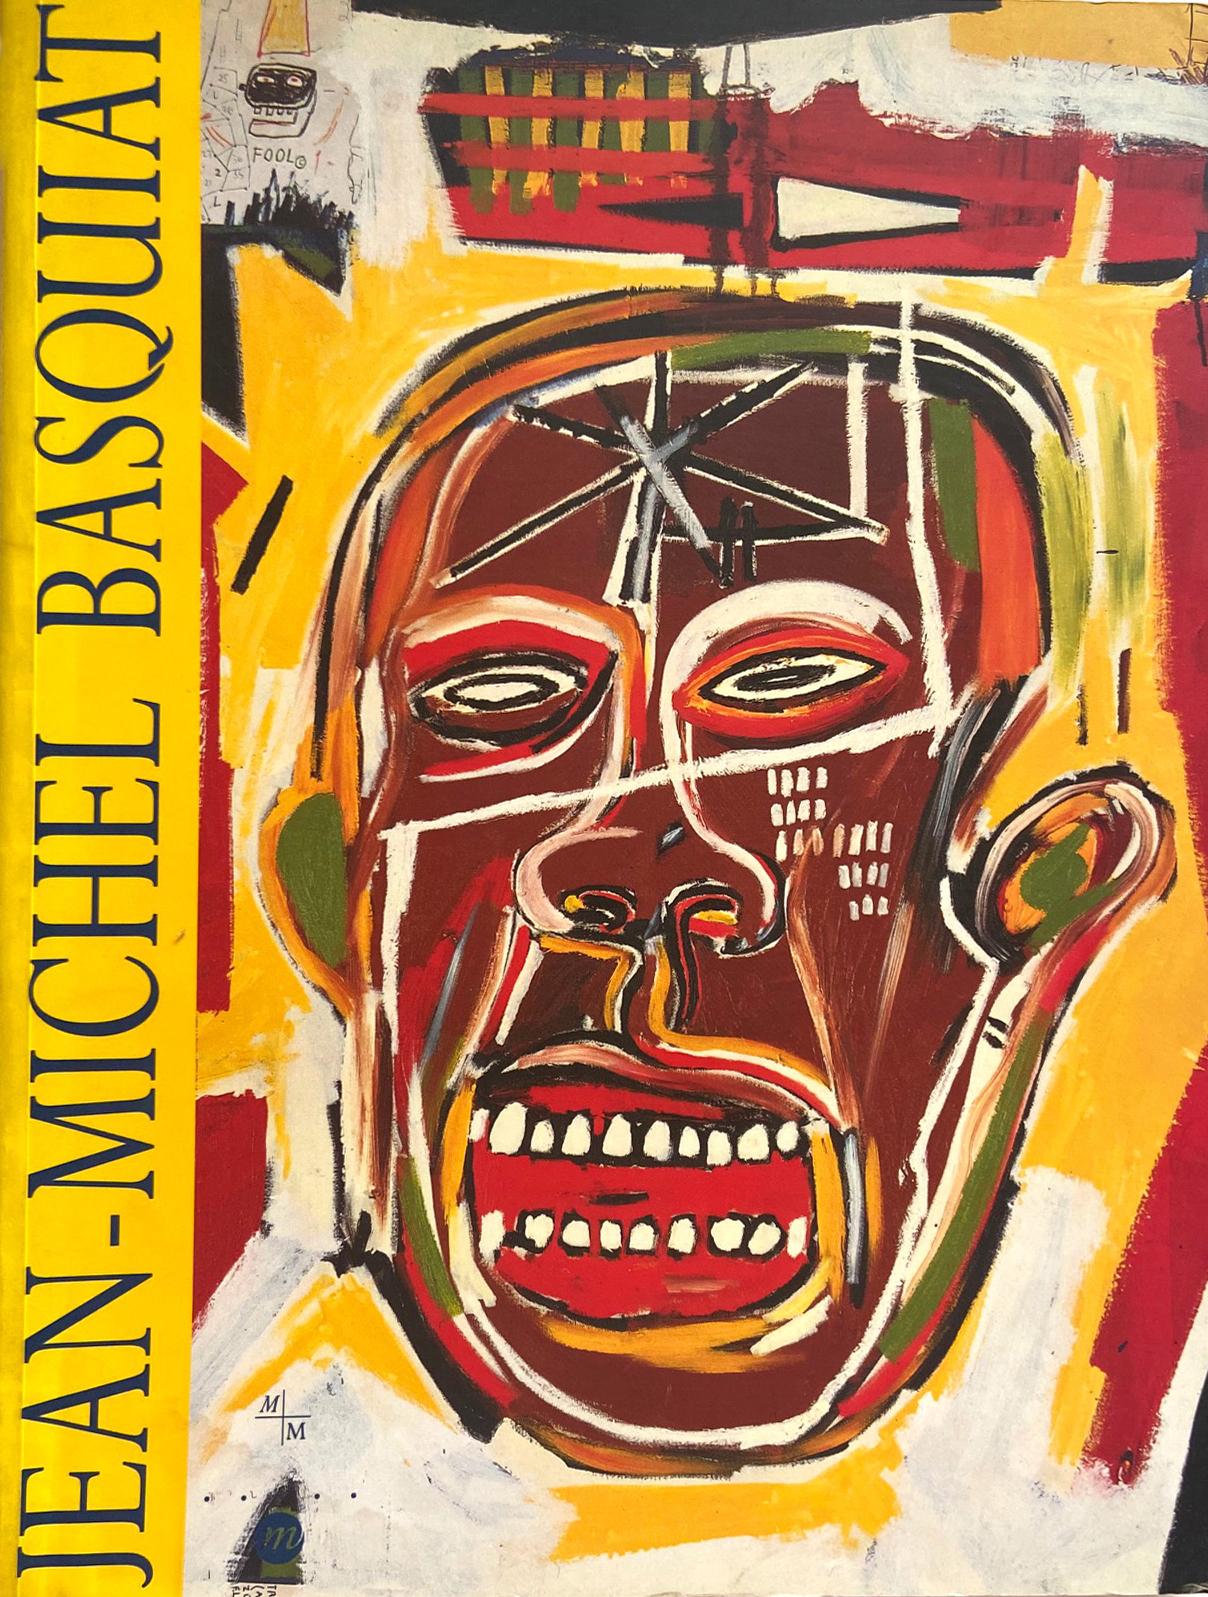 Basquiat Marseille exhibition catalog 1992 - Print by after Jean-Michel Basquiat